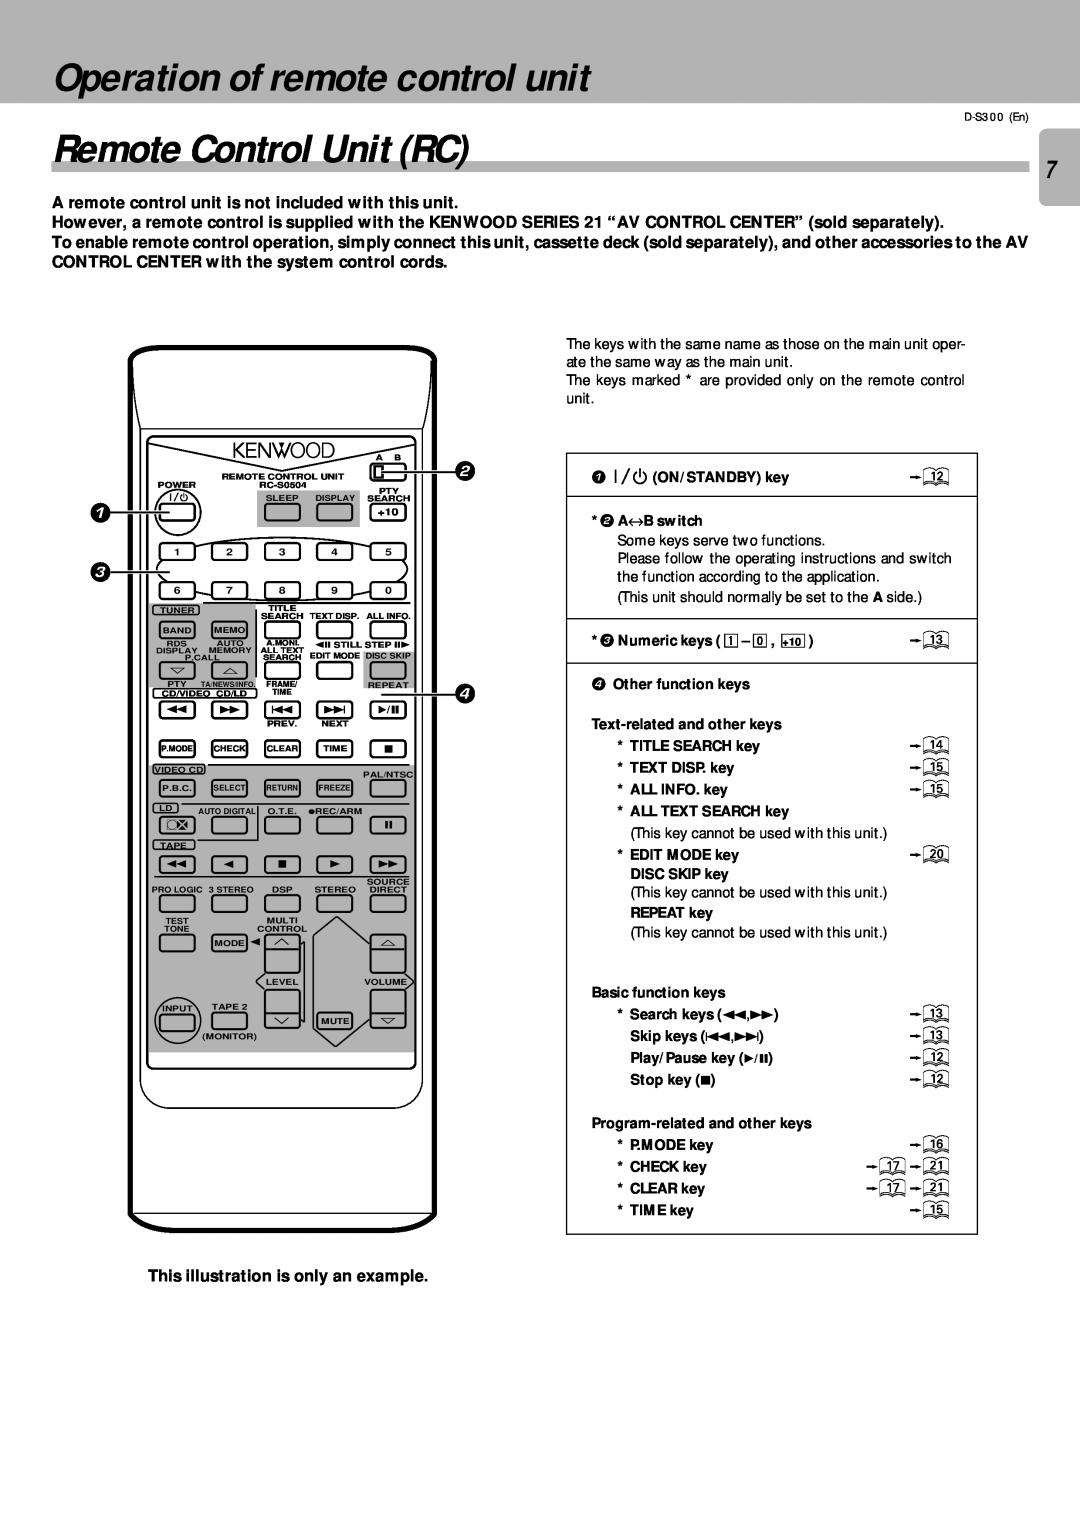 Kenwood D-S300 instruction manual Operation of remote control unit, Remote Control Unit RC 